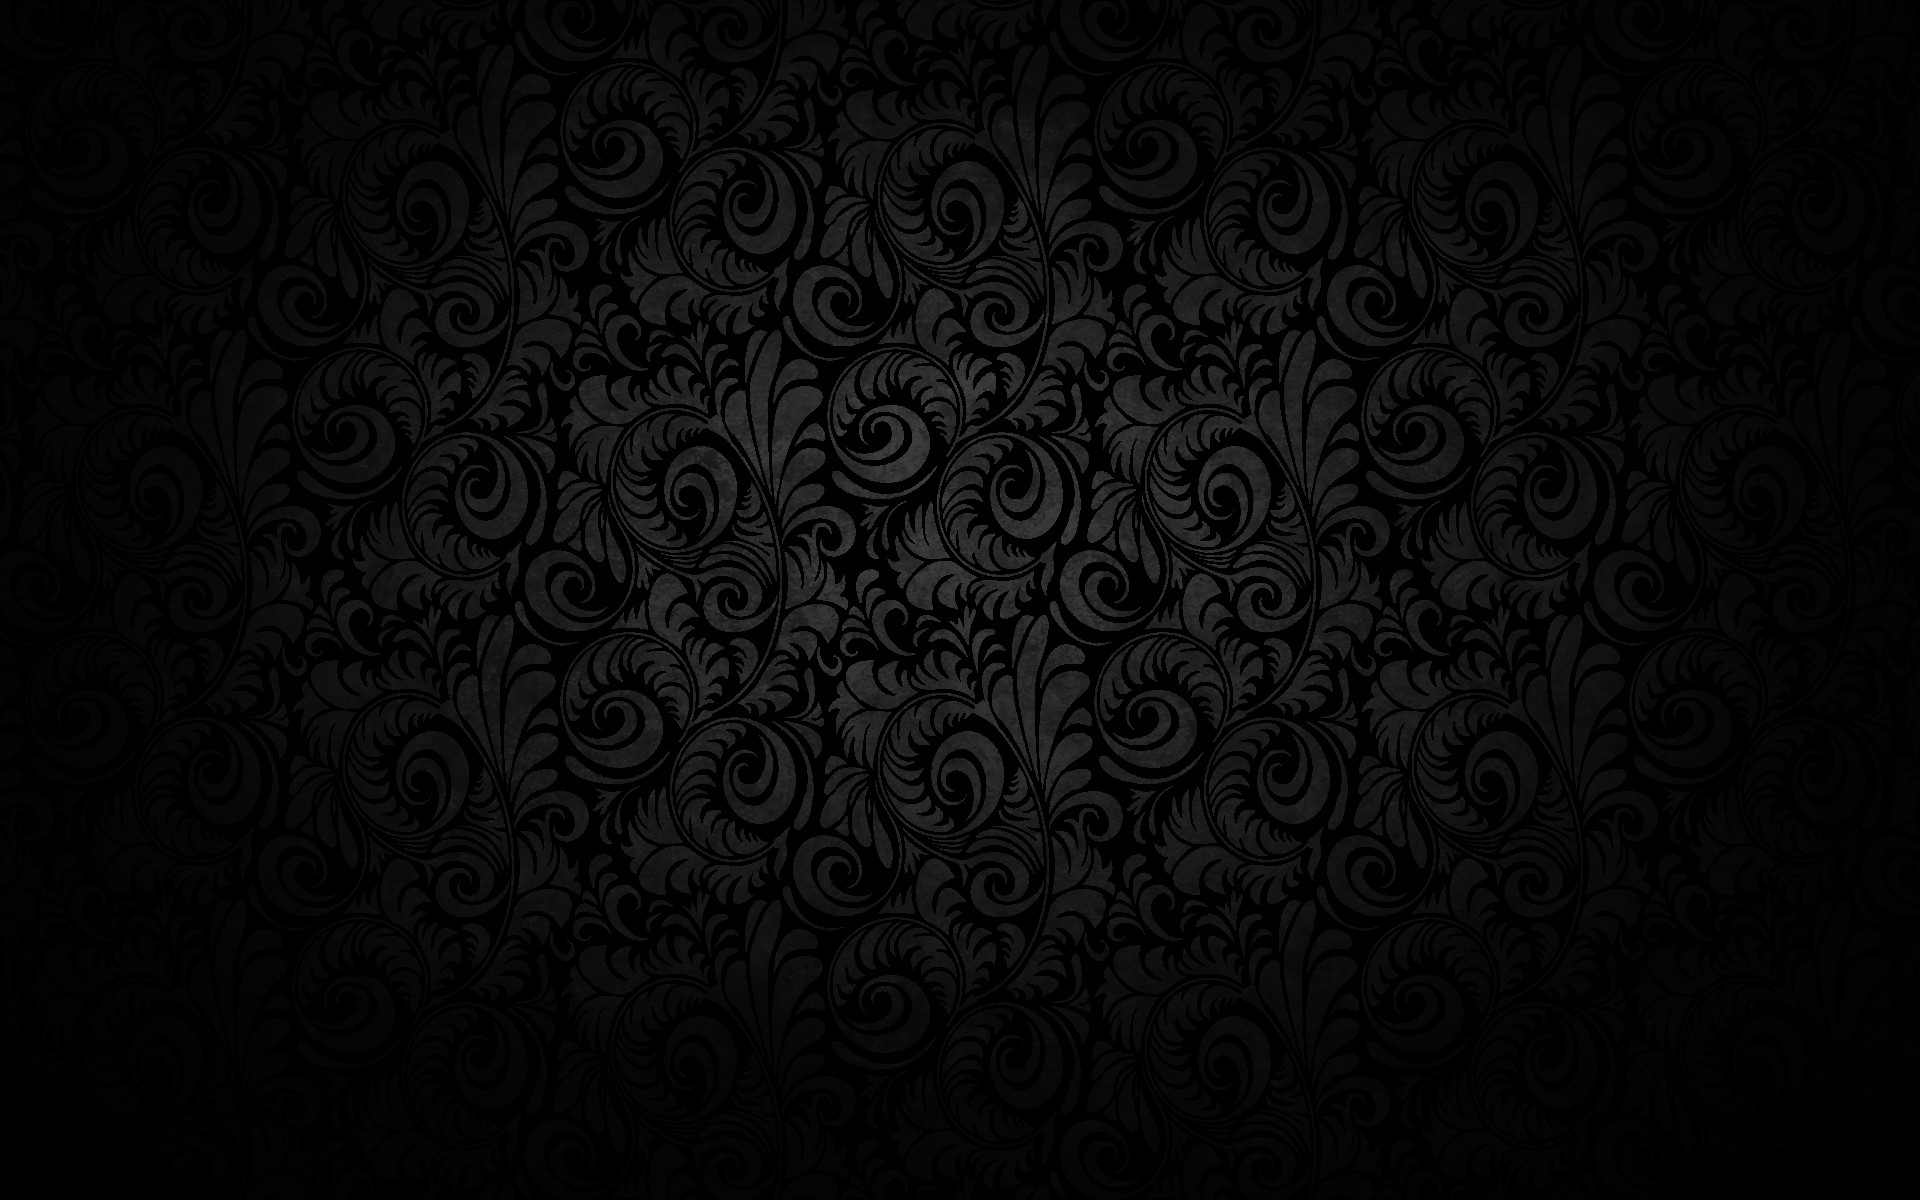 textured black background download amazing